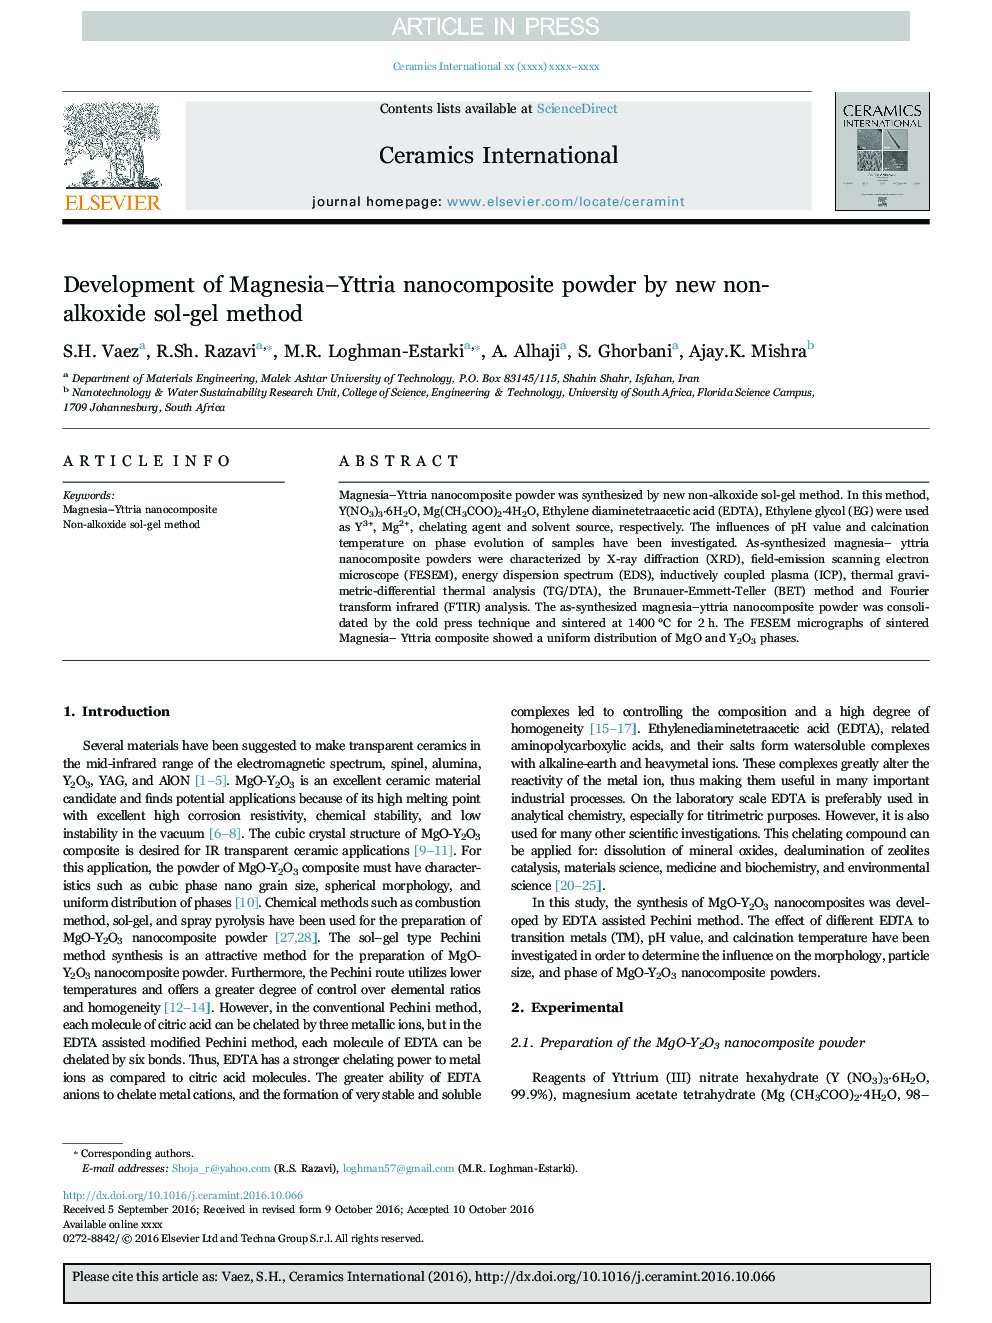 Development of Magnesia-Yttria nanocomposite powder by new non-alkoxide sol-gel method